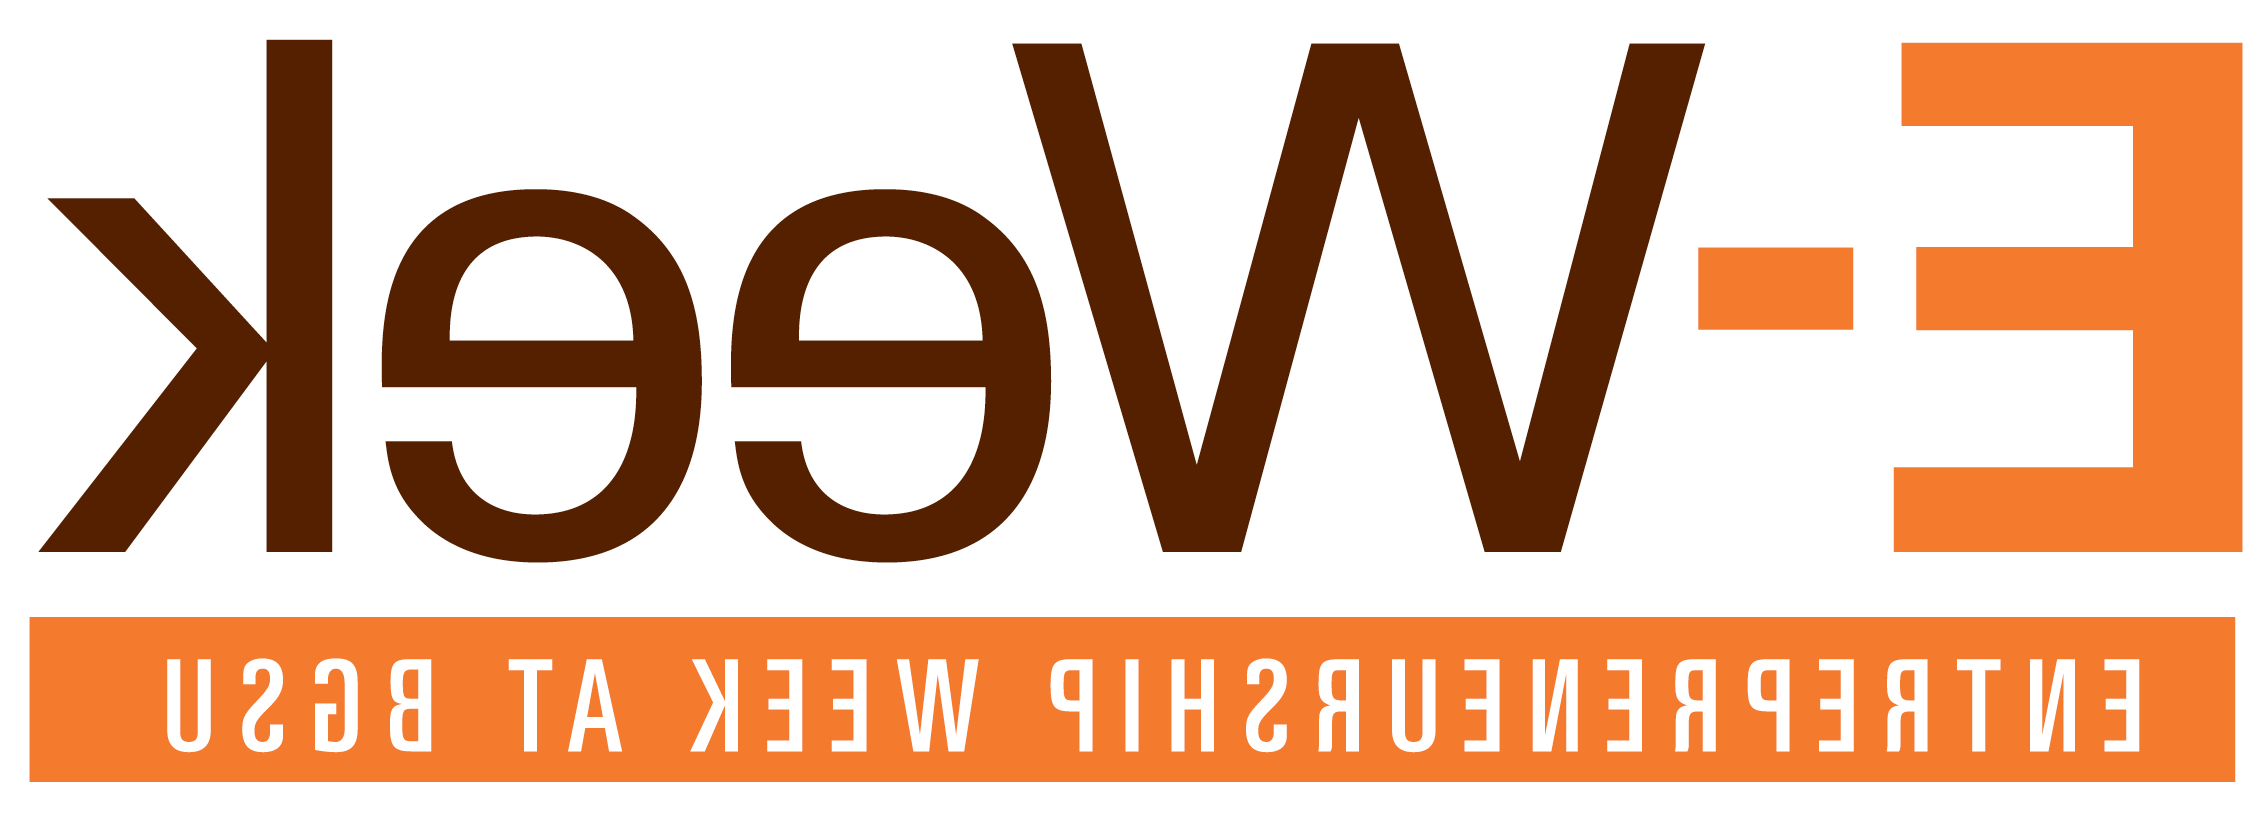 update-e-week-logo